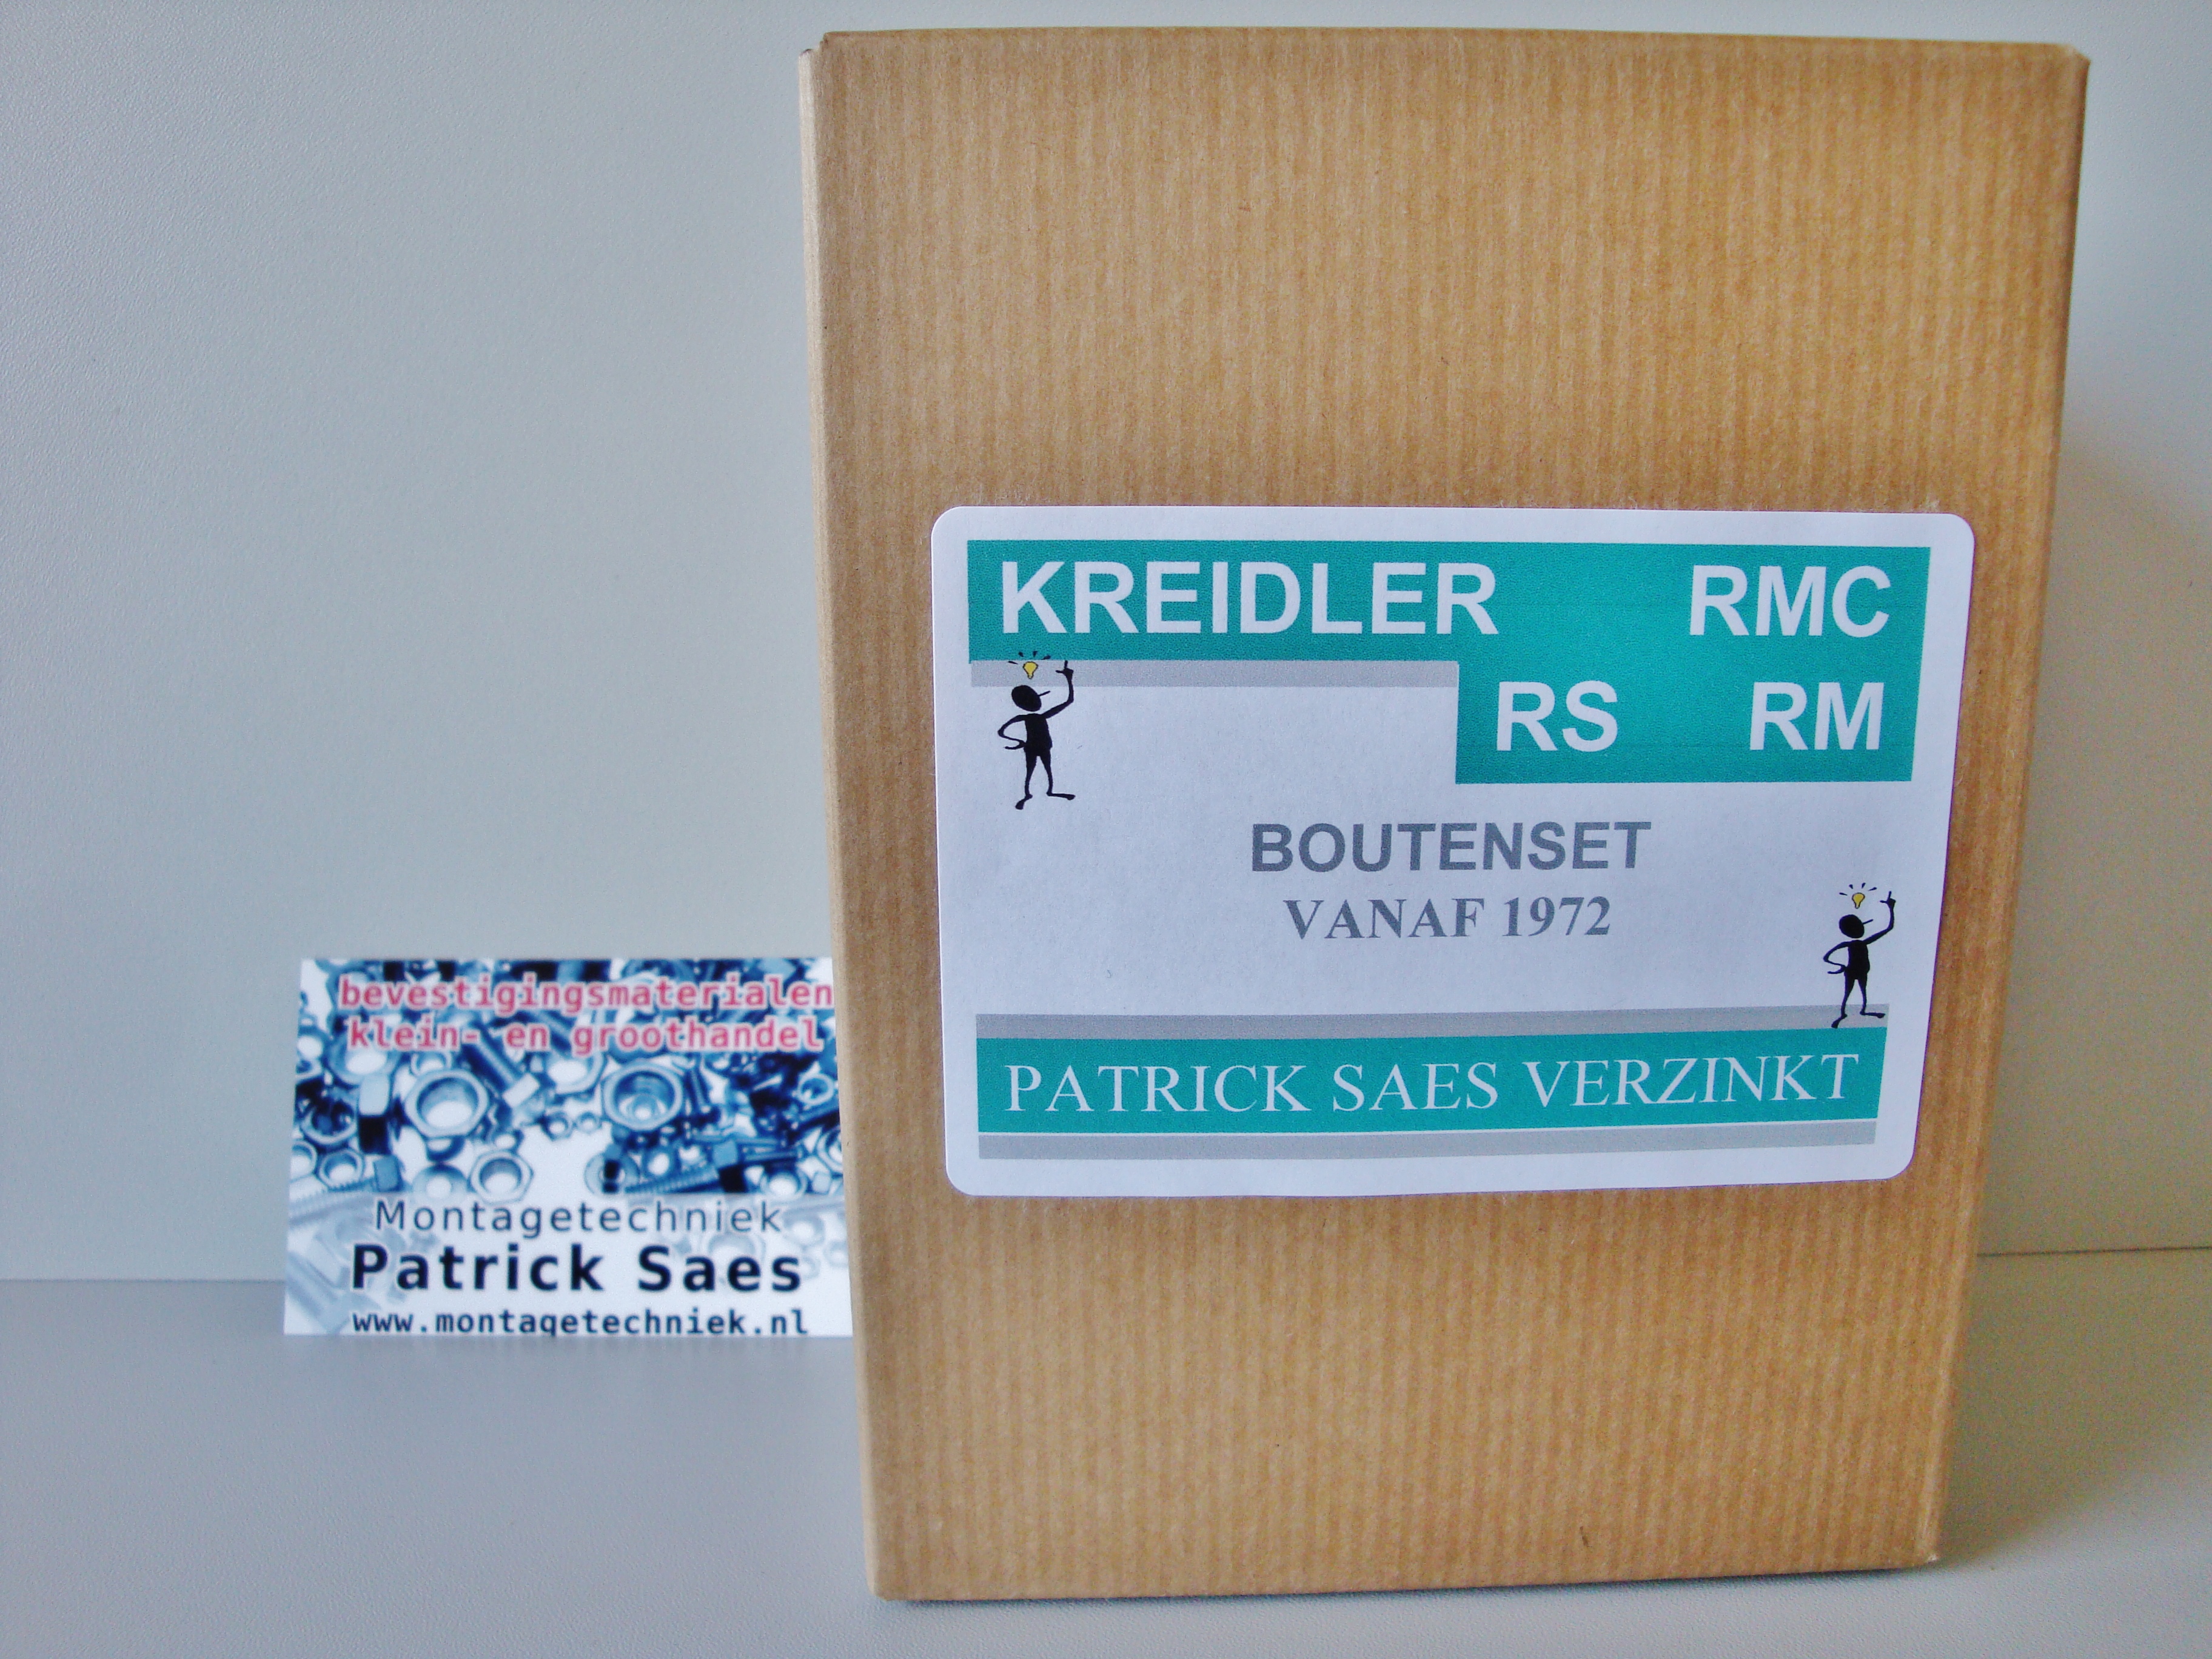 Verzinkte boutenset Kreidler rmc / rs / rm vanaf 1972